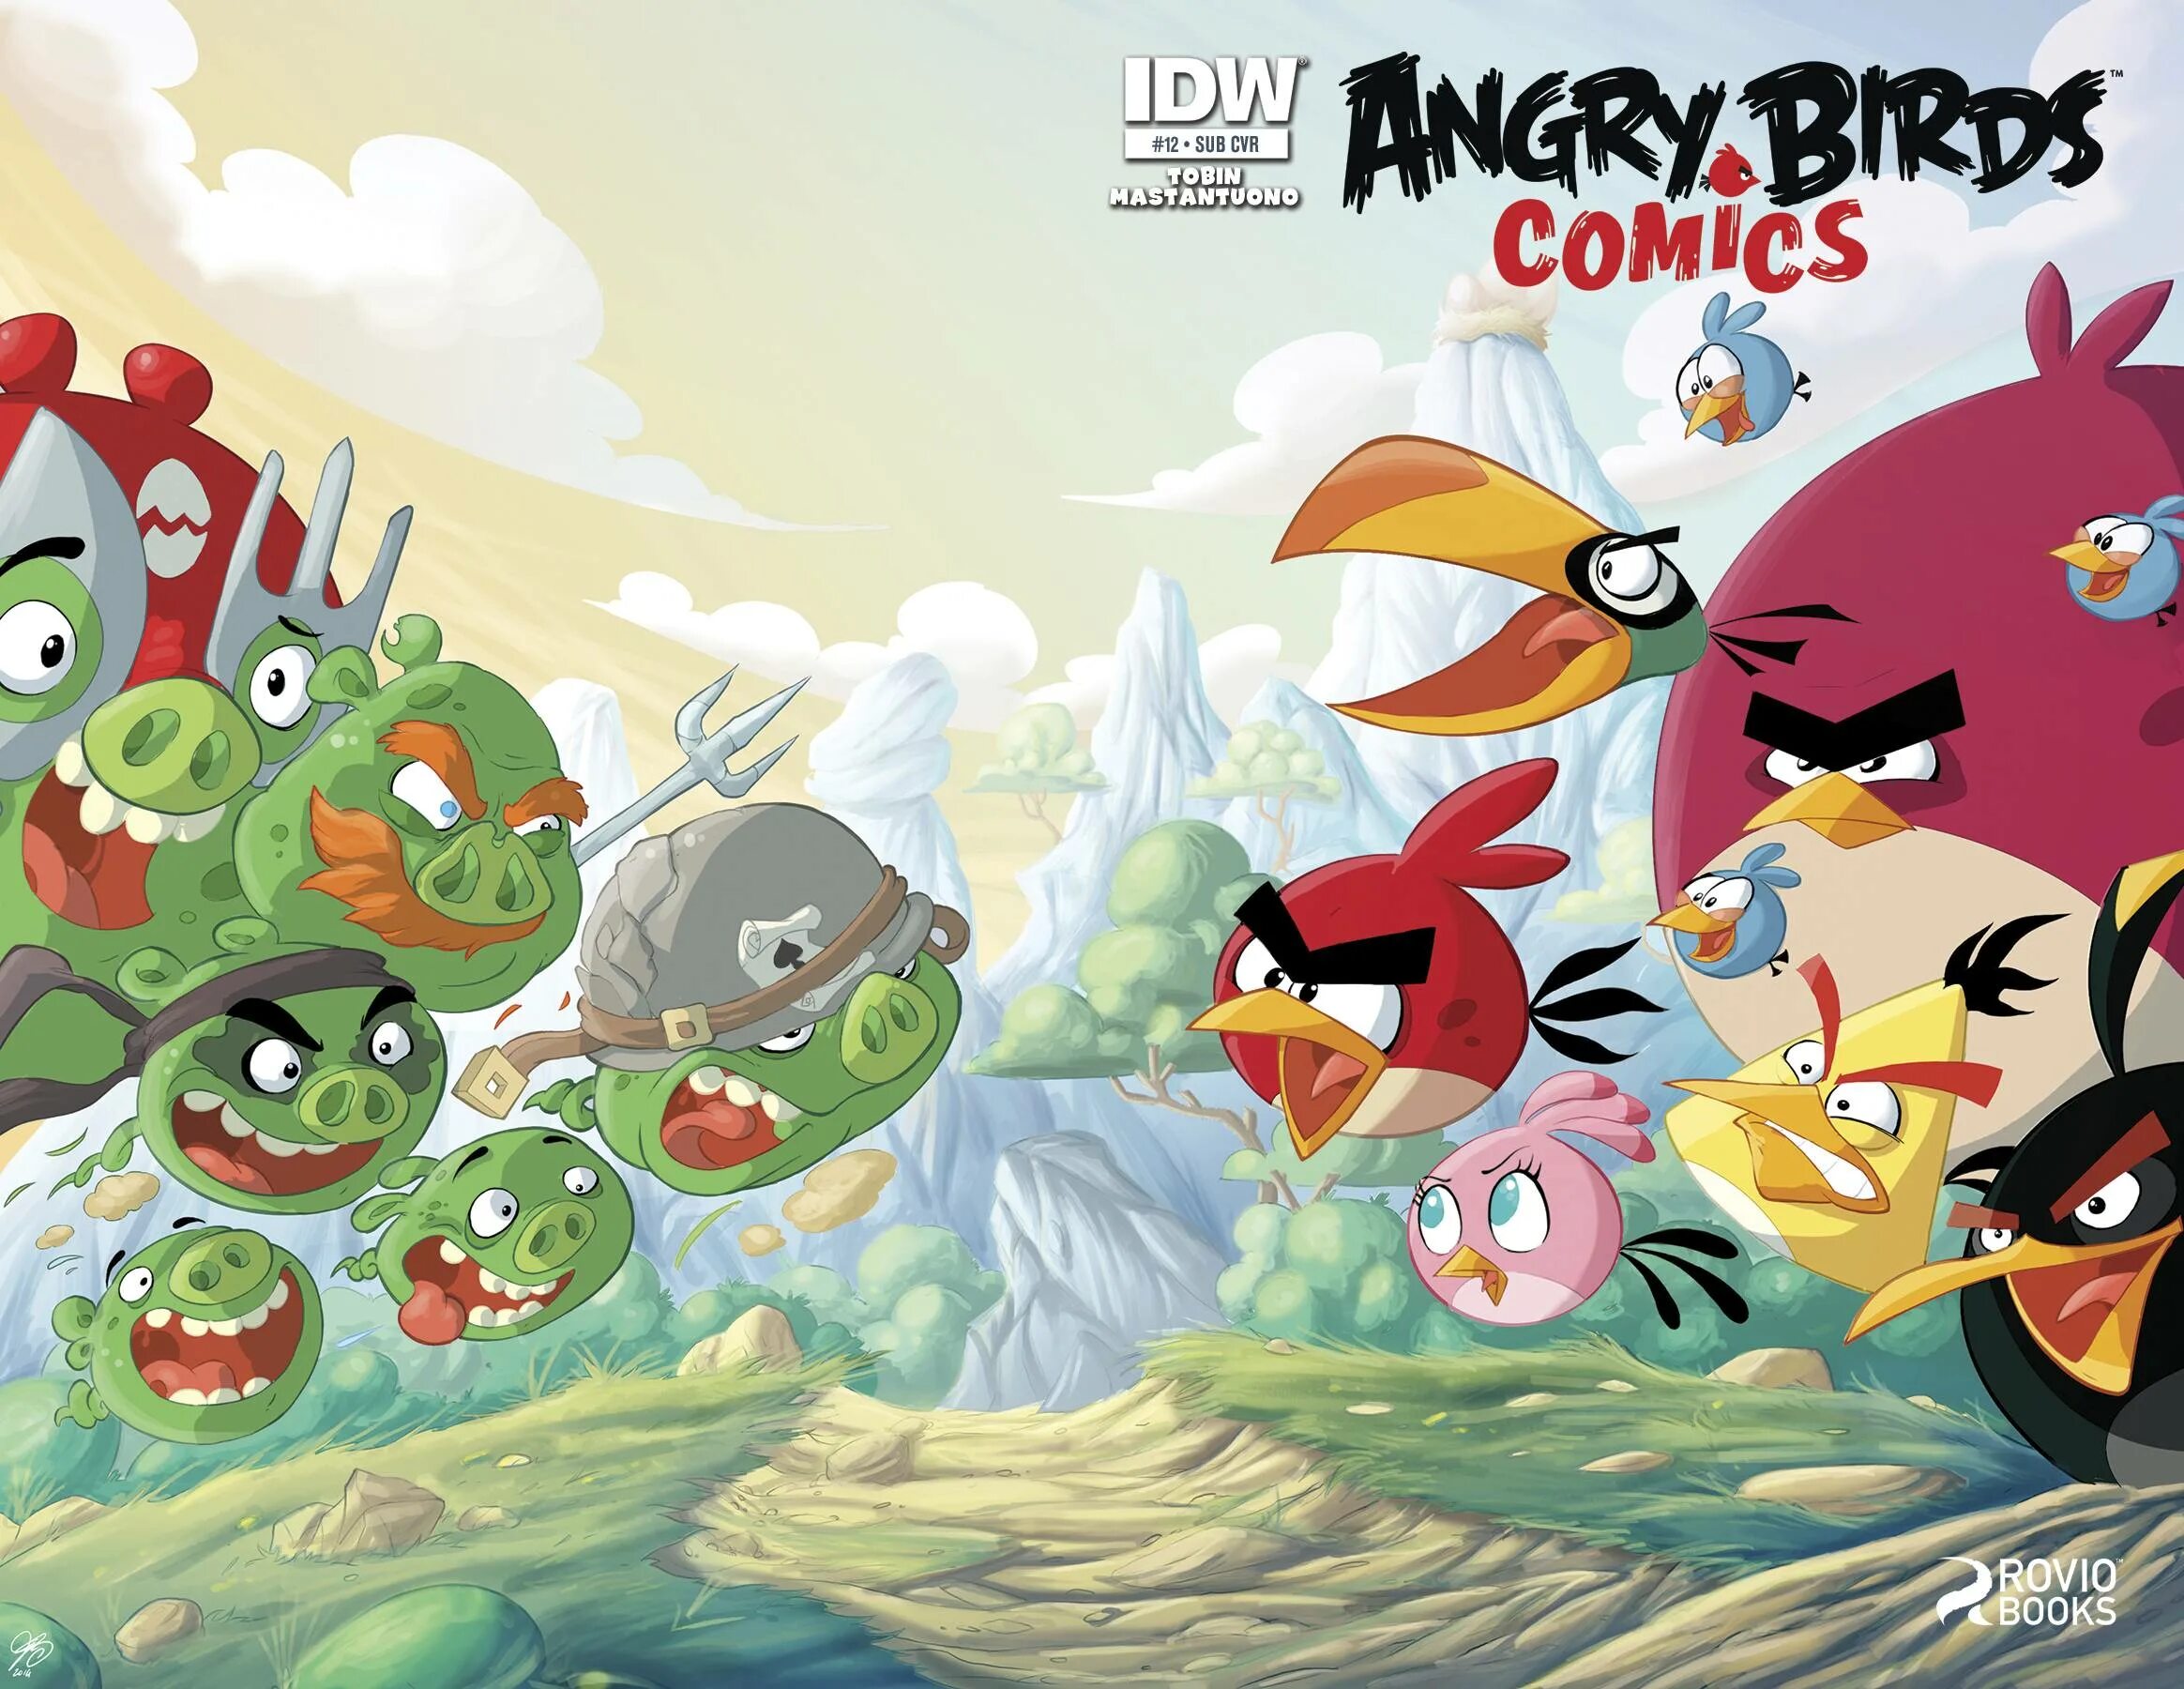 Angry birds versions. Злые птицы. Энгри бёрдз. Энгри бердз Китай. Angry Birds загрузочный экран.